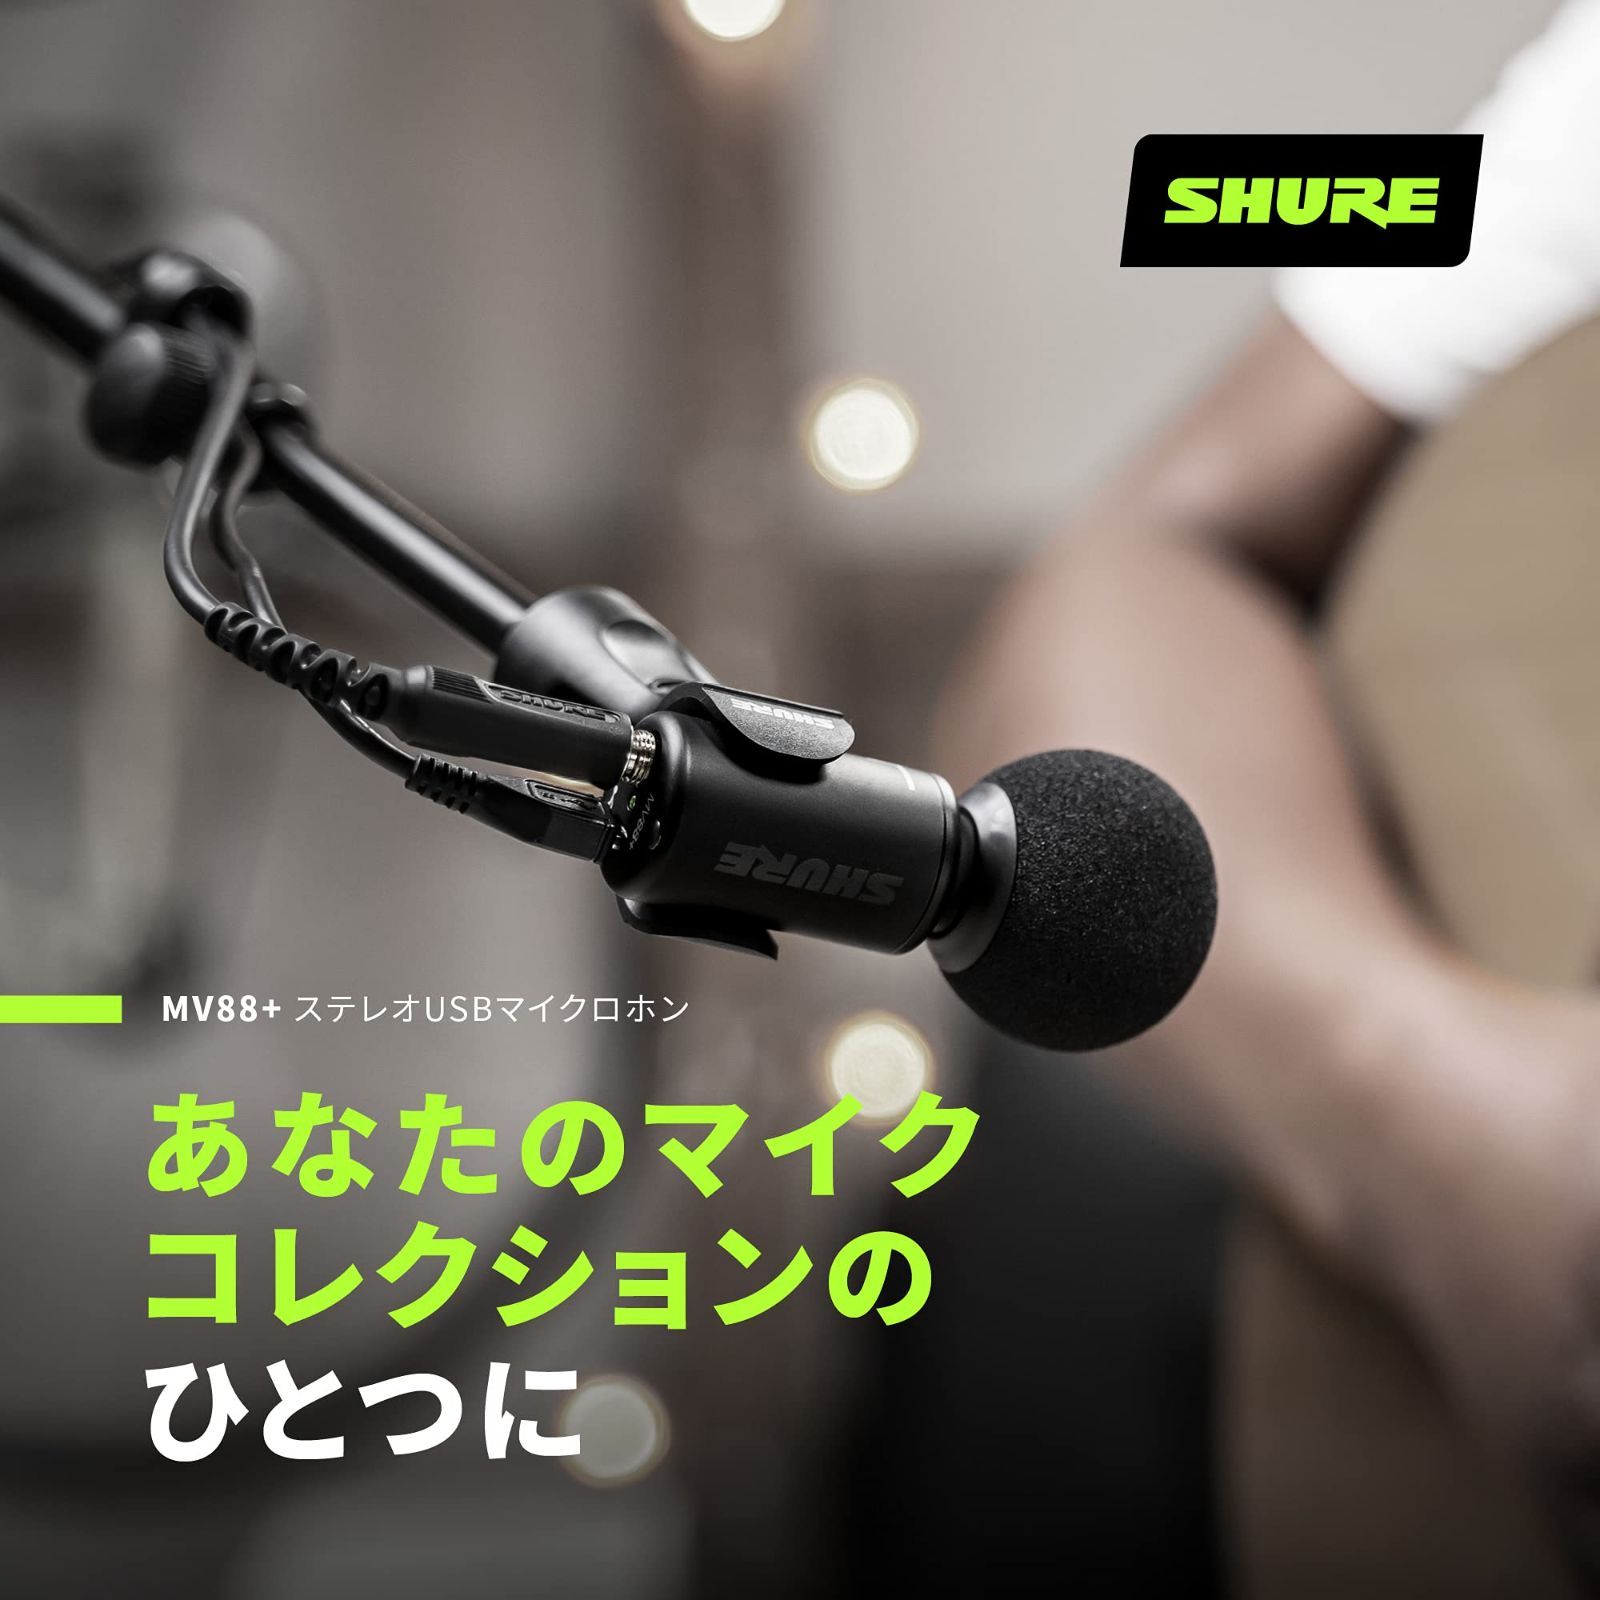 SHURE MV88 iOSデバイス用Dコンデンサーマイク 【限定特価】 - 配信 ...